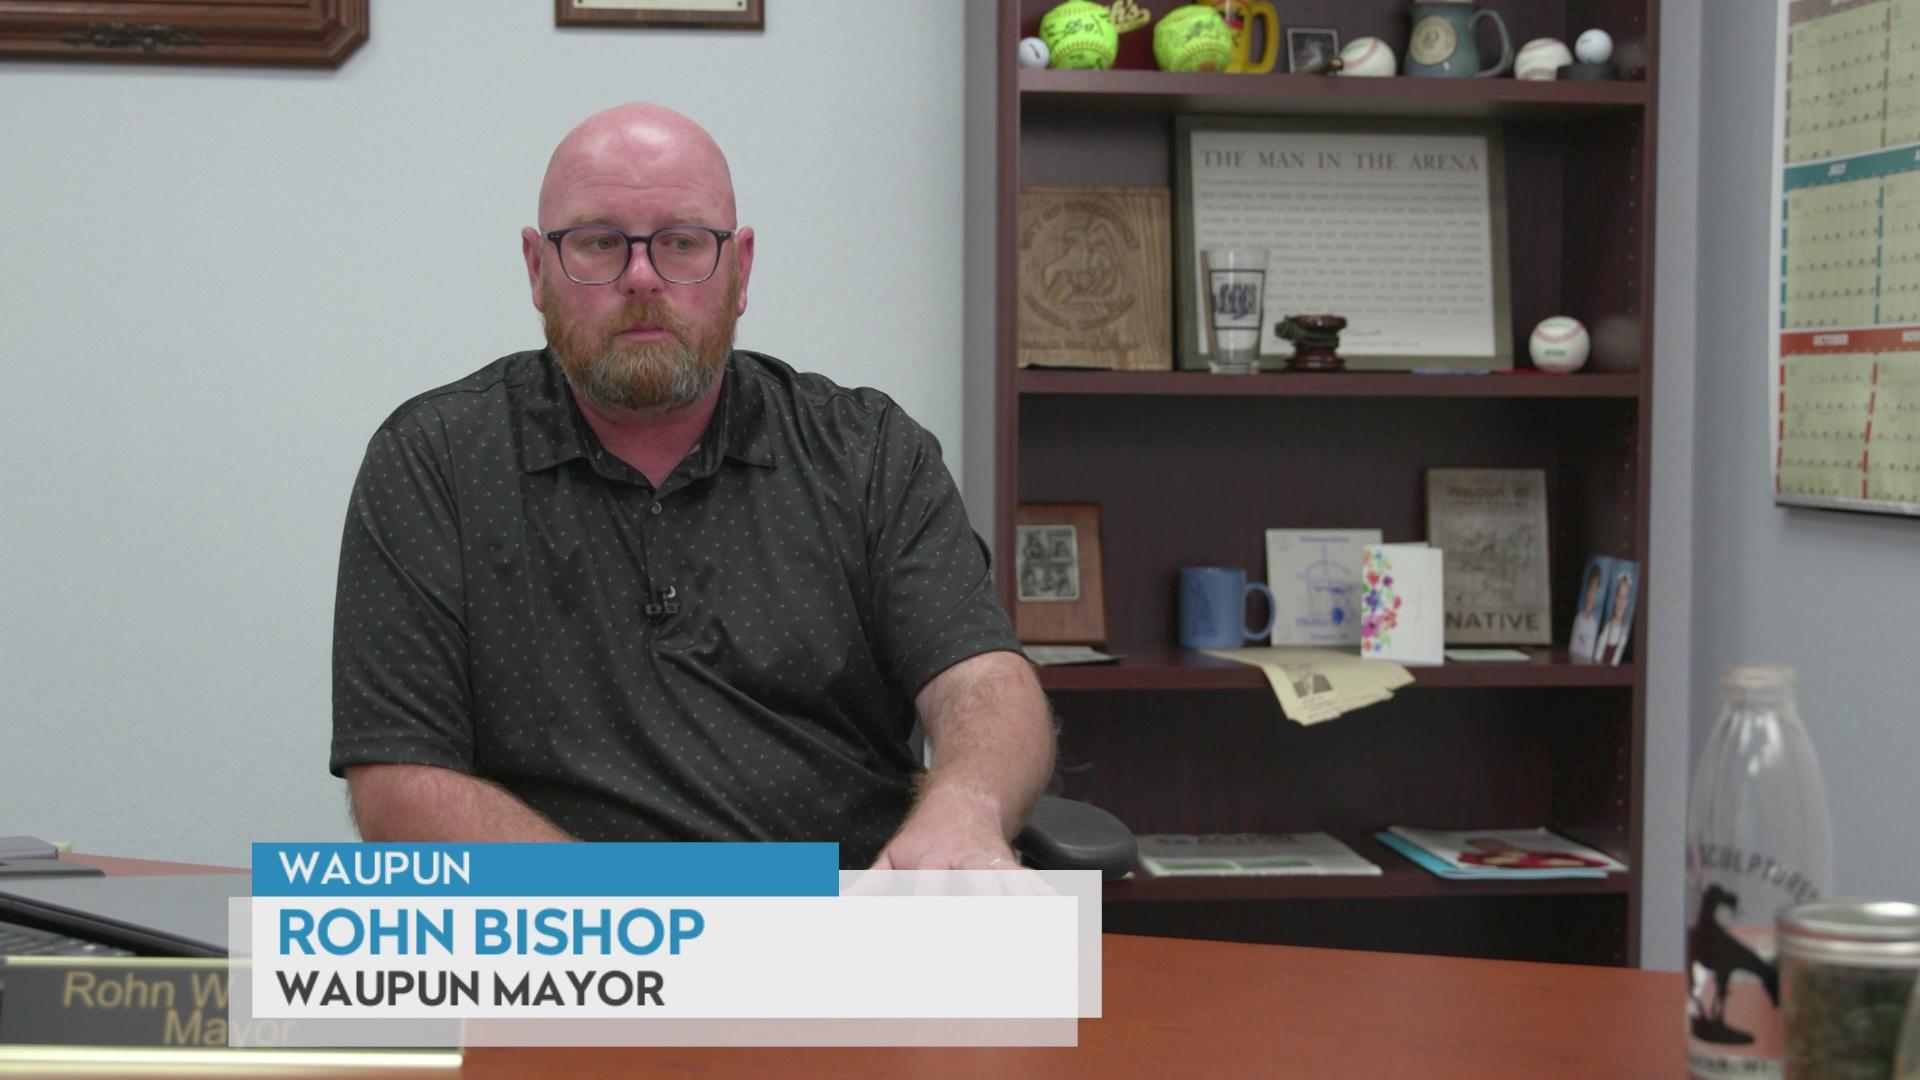 Mayor Rohn Bishop on corrections officer jobs in Waupun